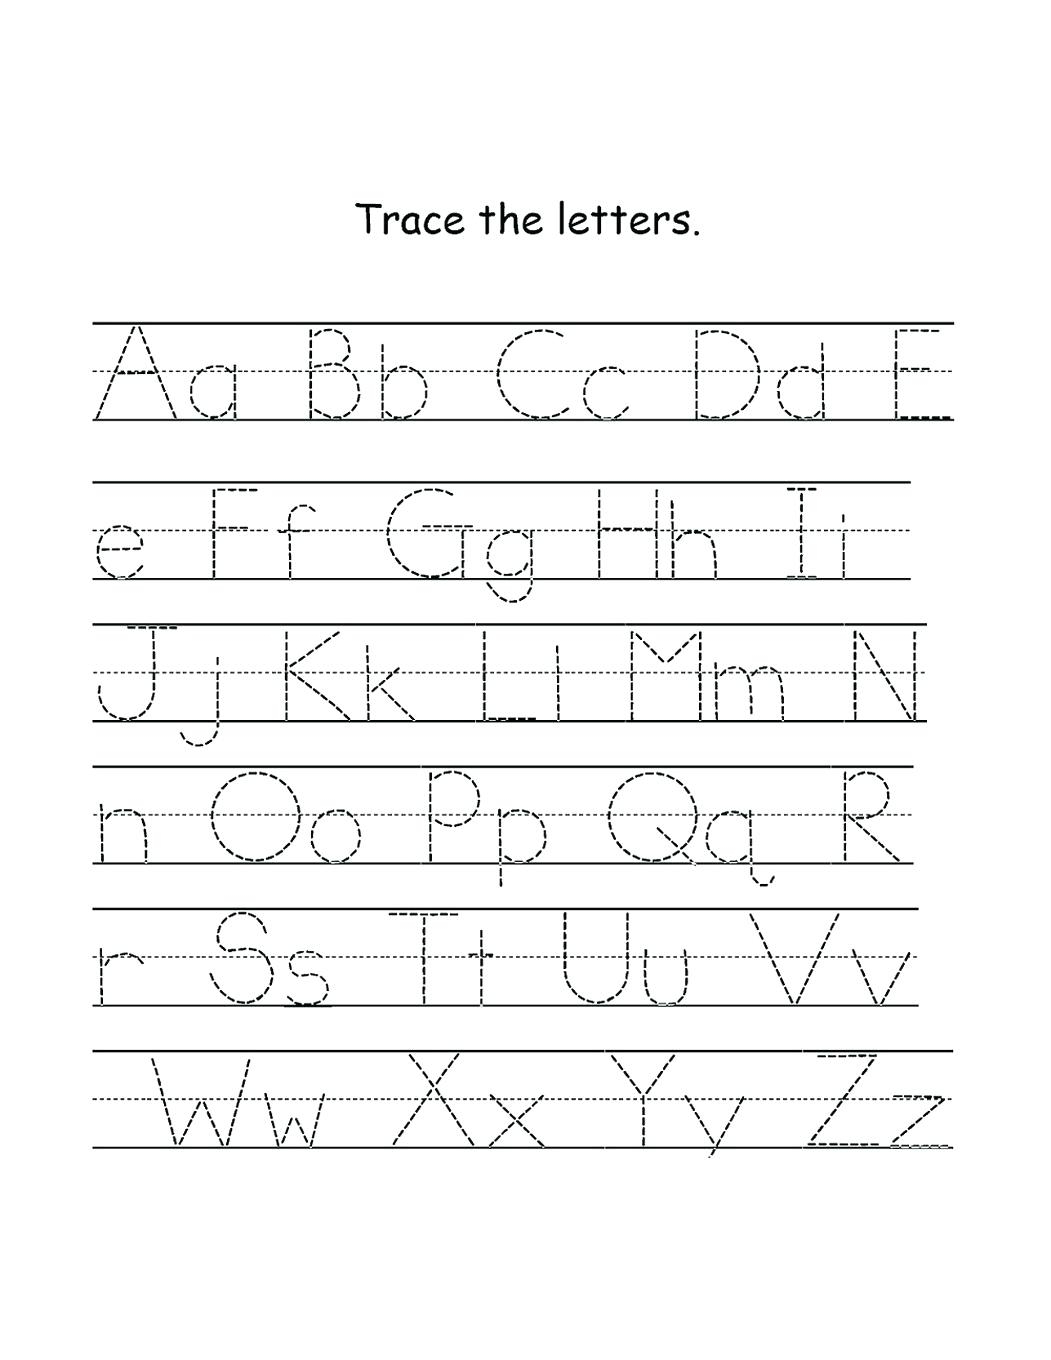 tracing-letters-az-worksheets-tracinglettersworksheets